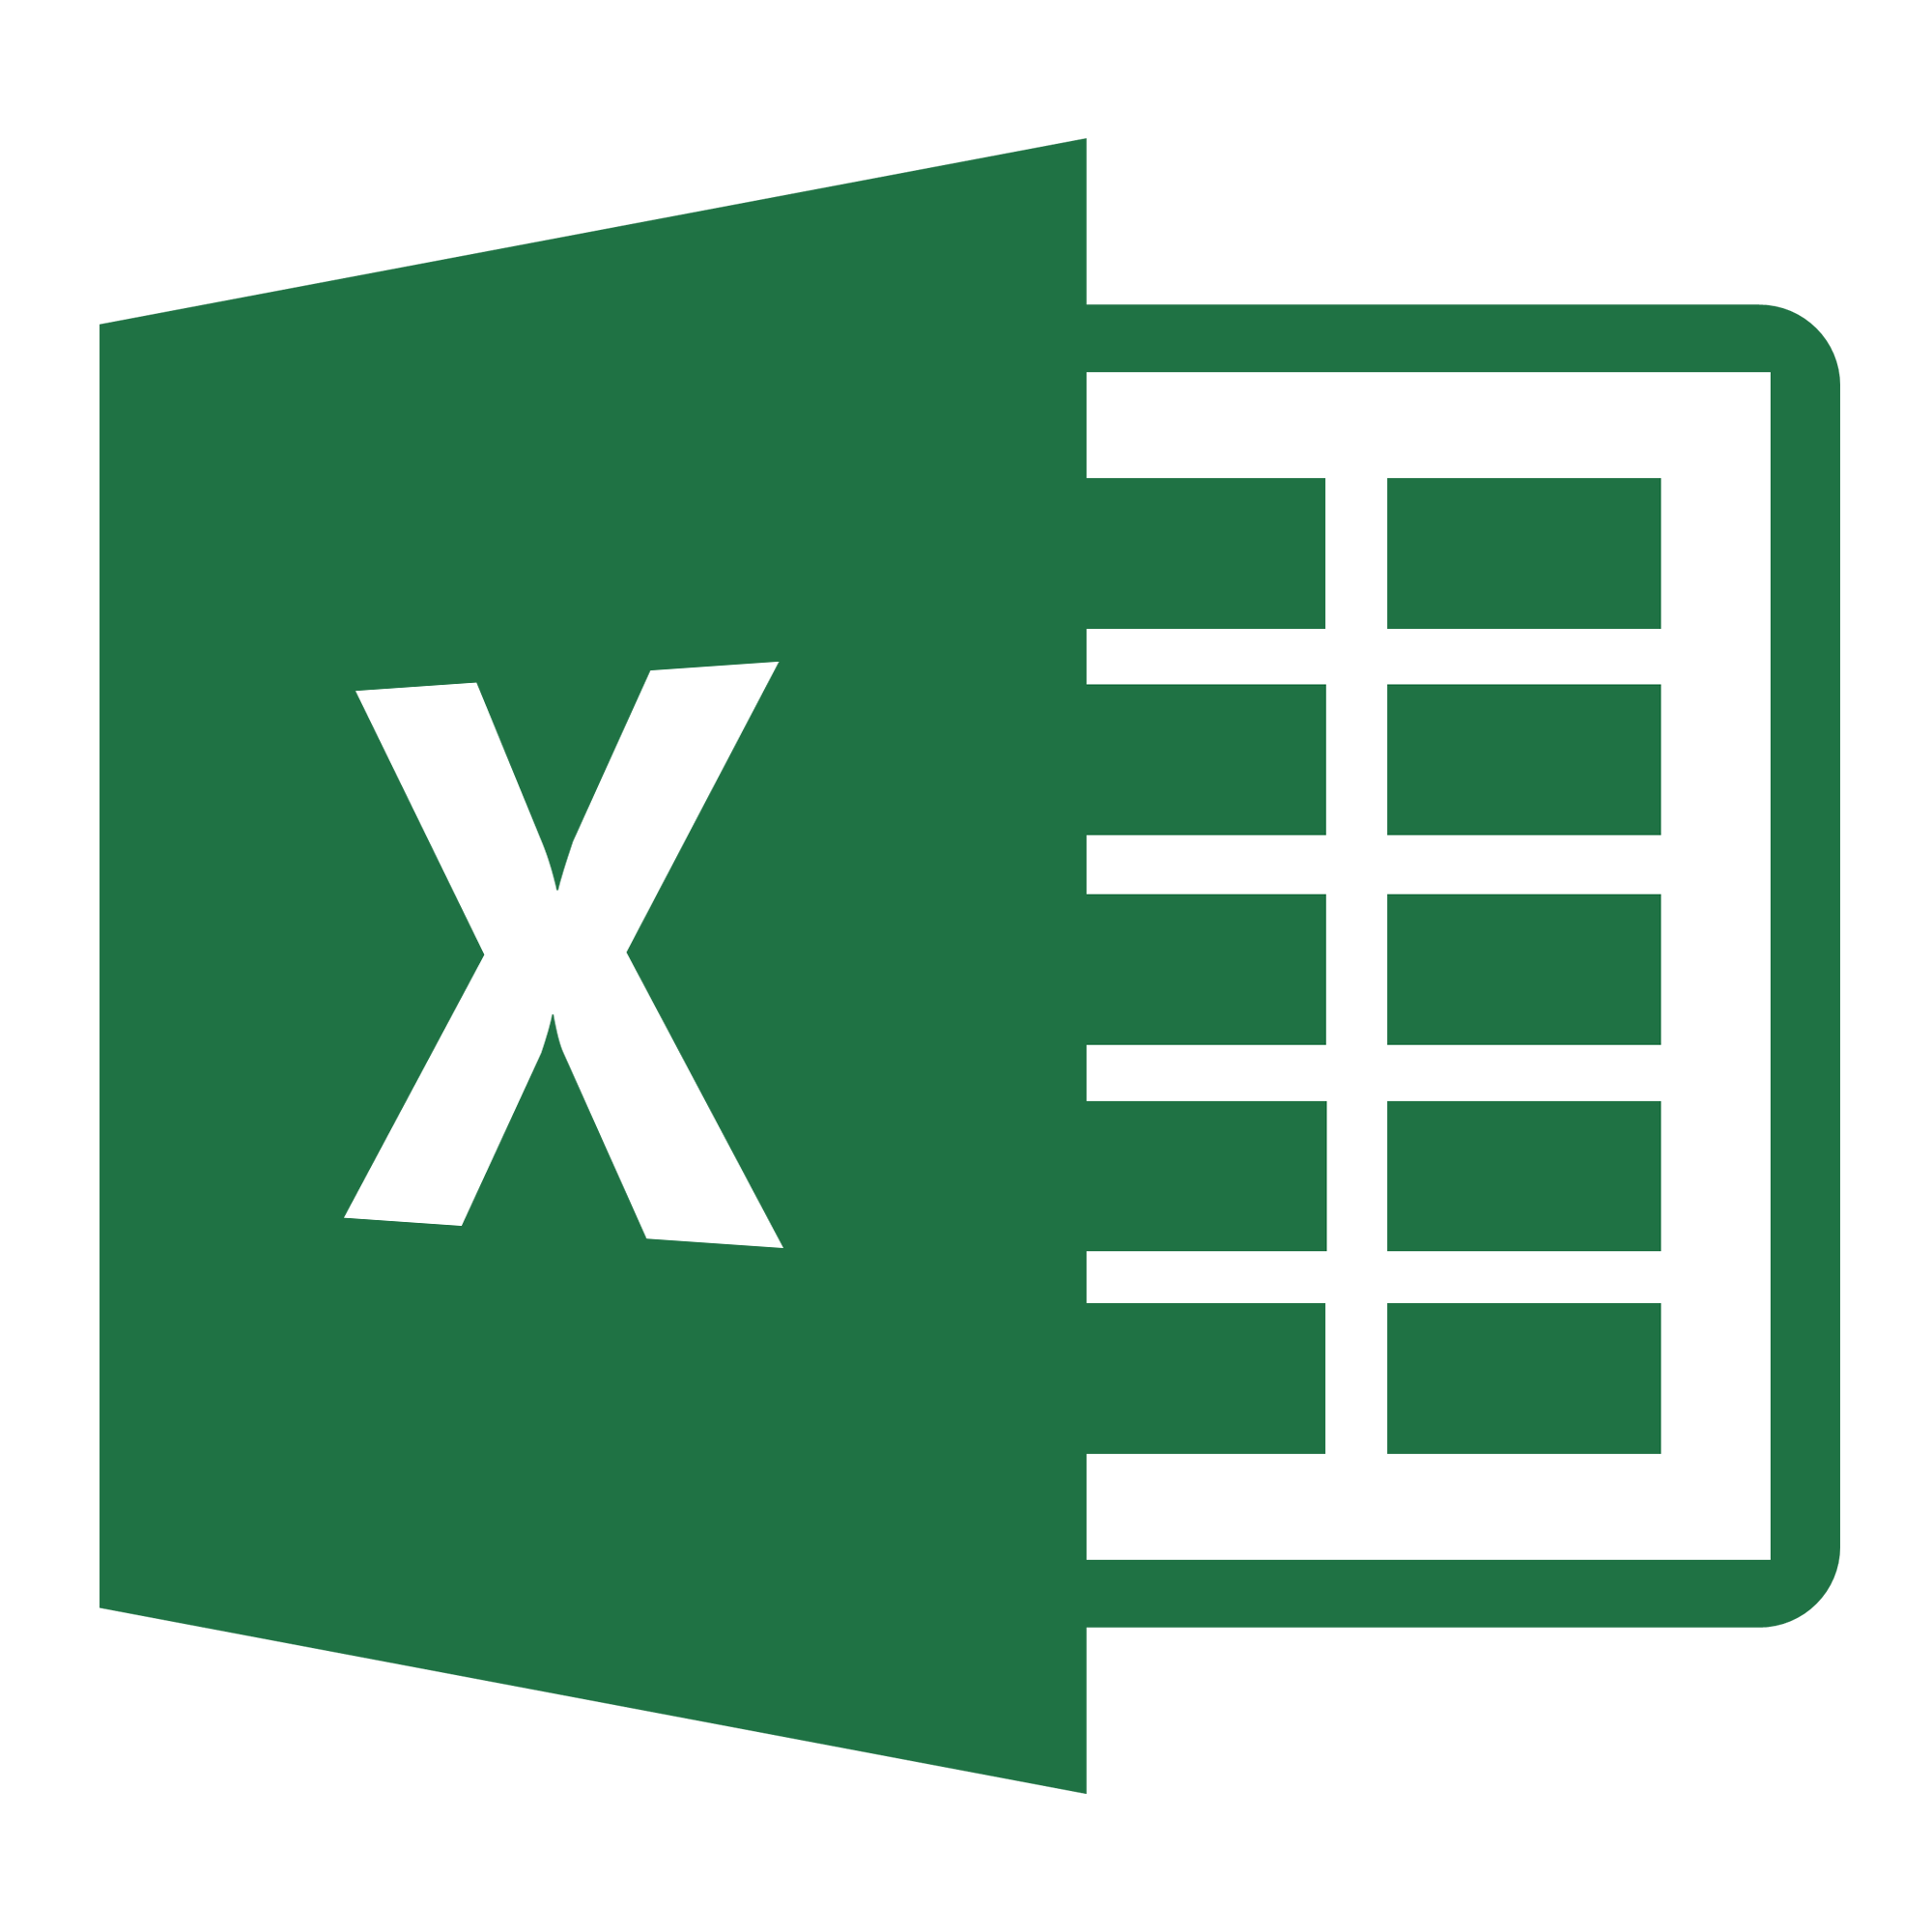 Excel图表如何另存为图片？-WPS Excel把图表另存为图片的方法 - 极光下载站